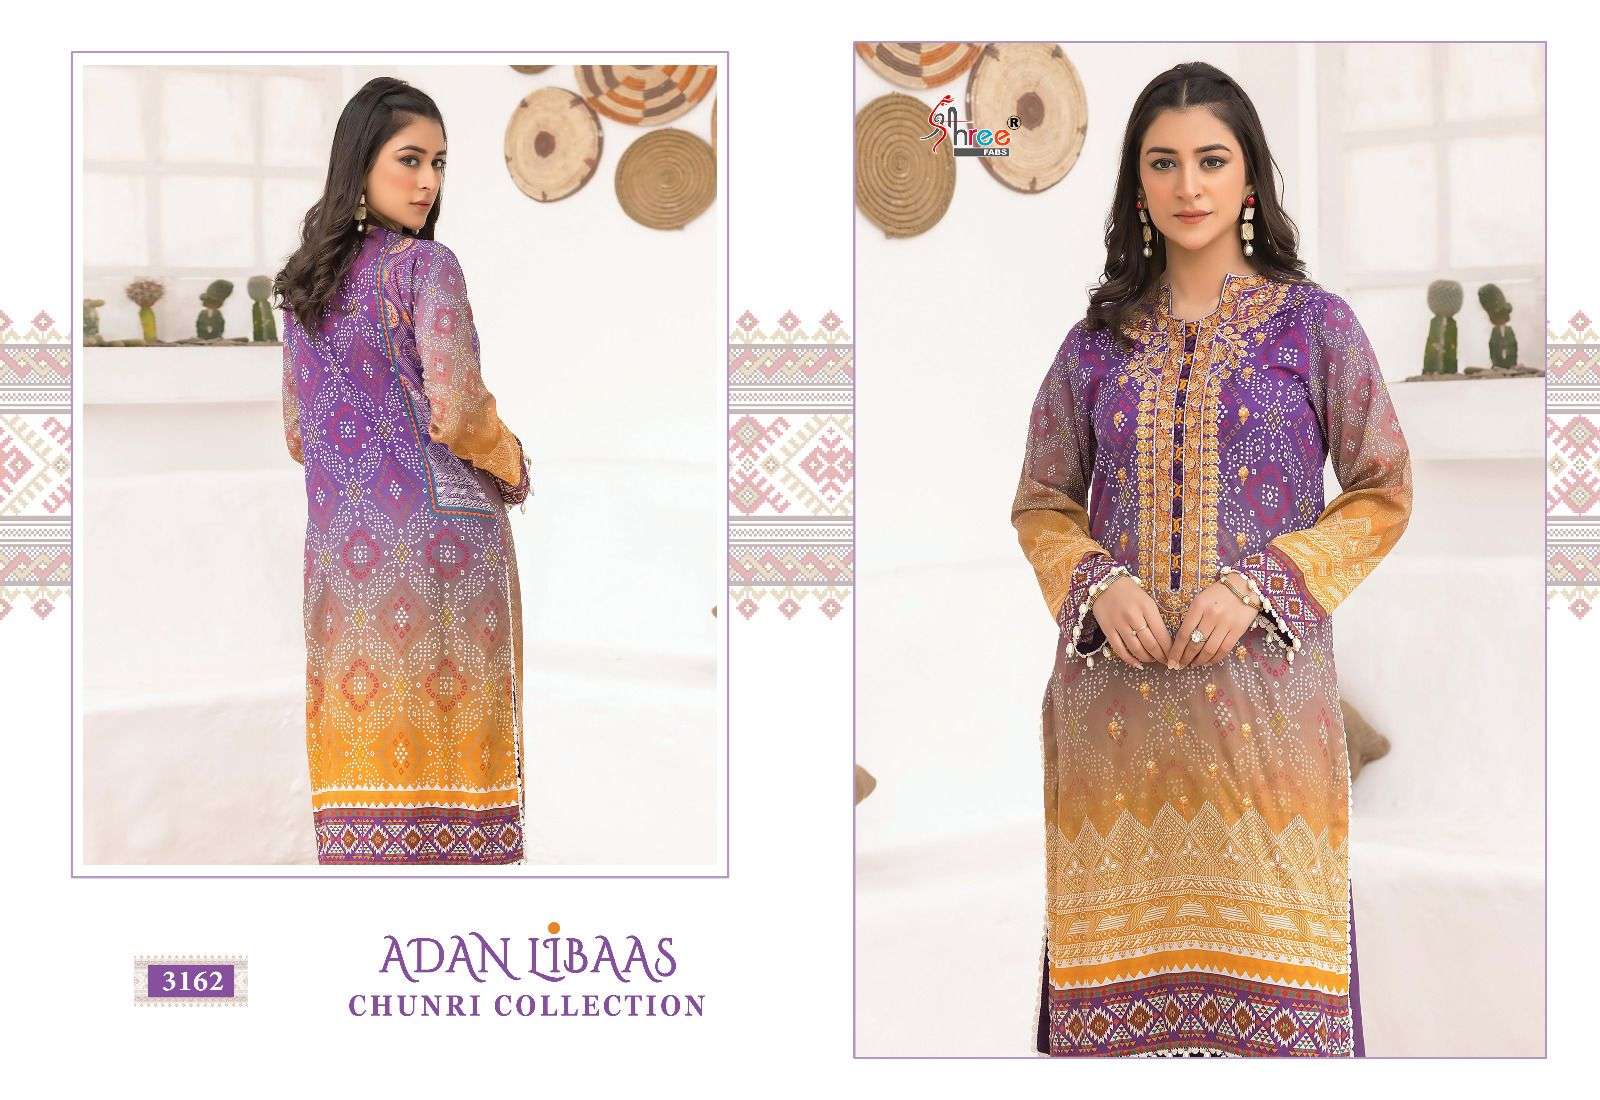 Shree Adan Libaas Chunri Collection Cotton Dupatta Pakistani Suit Wholesale catalog